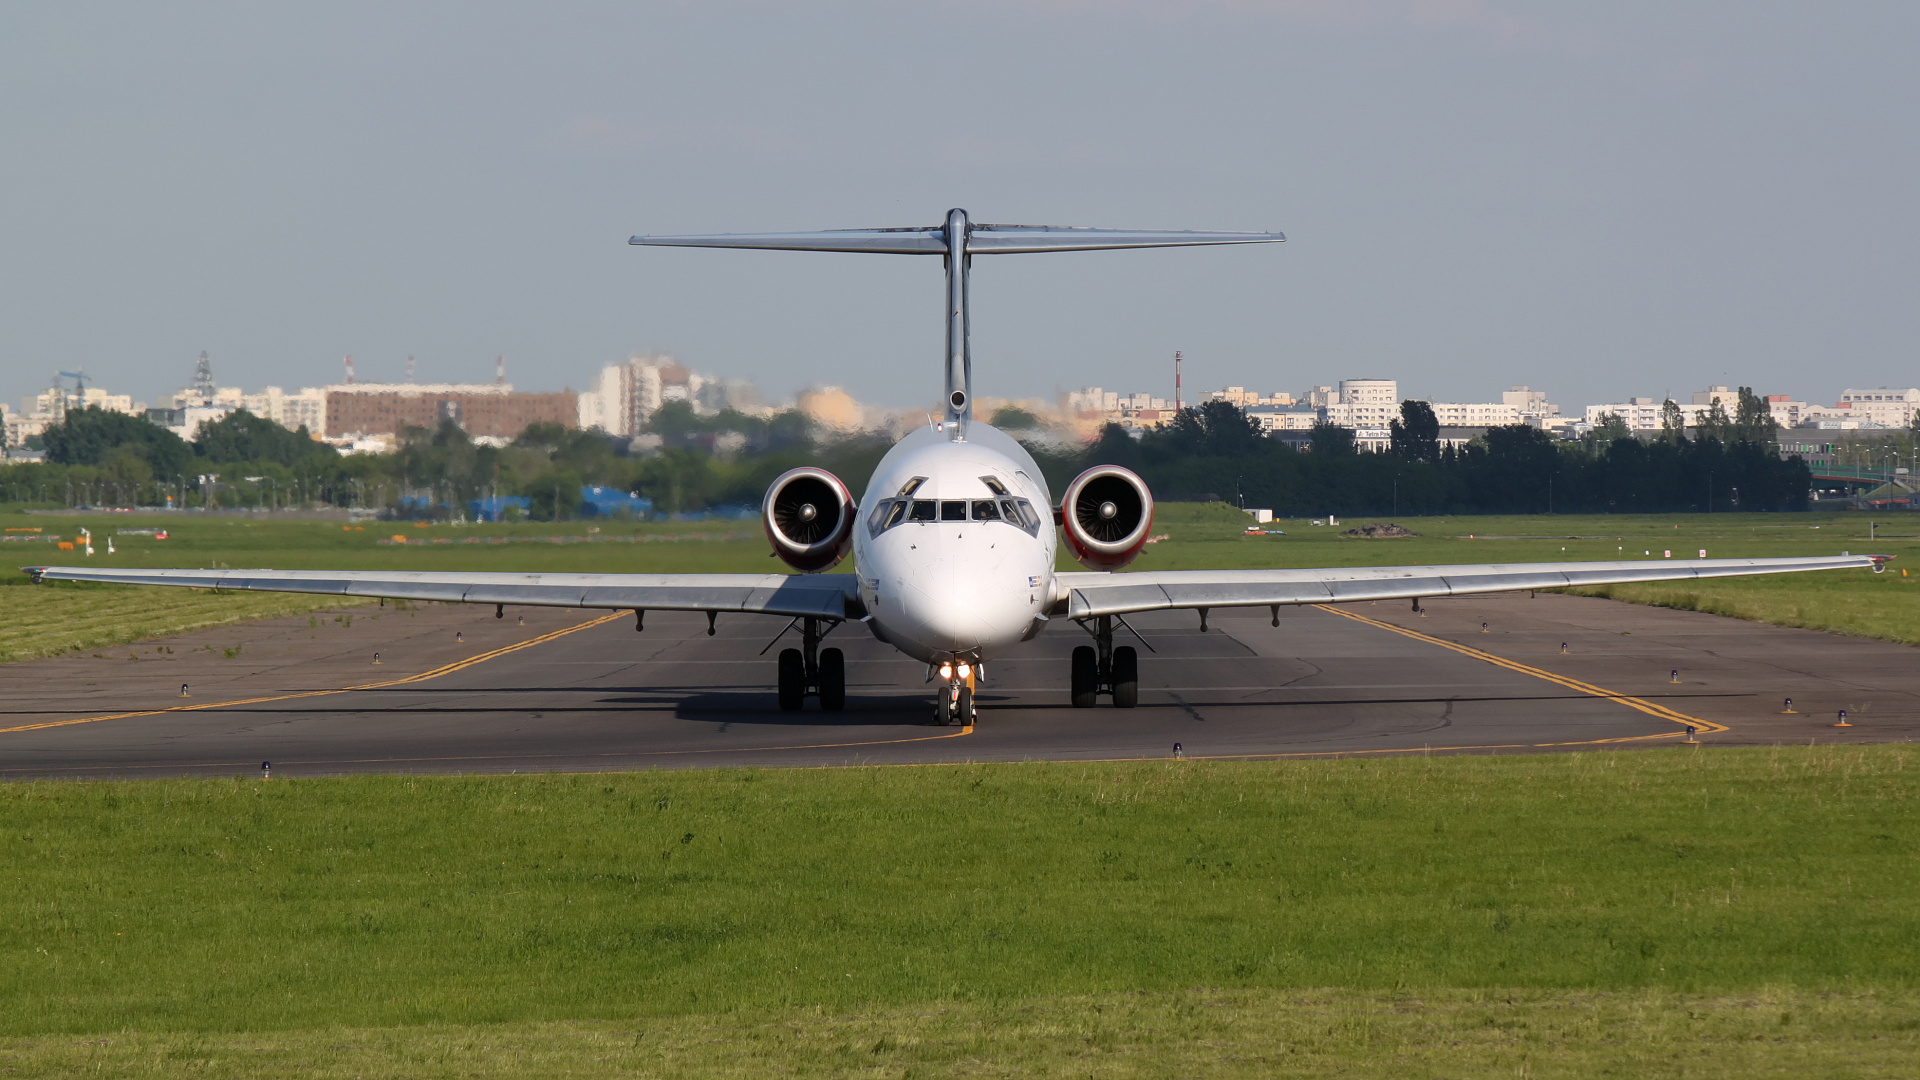 OY-KHE (Star Alliance livery) (Aircraft » EPWA Spotting » McDonnell Douglas MD-82 » SAS Scandinavian Airlines)